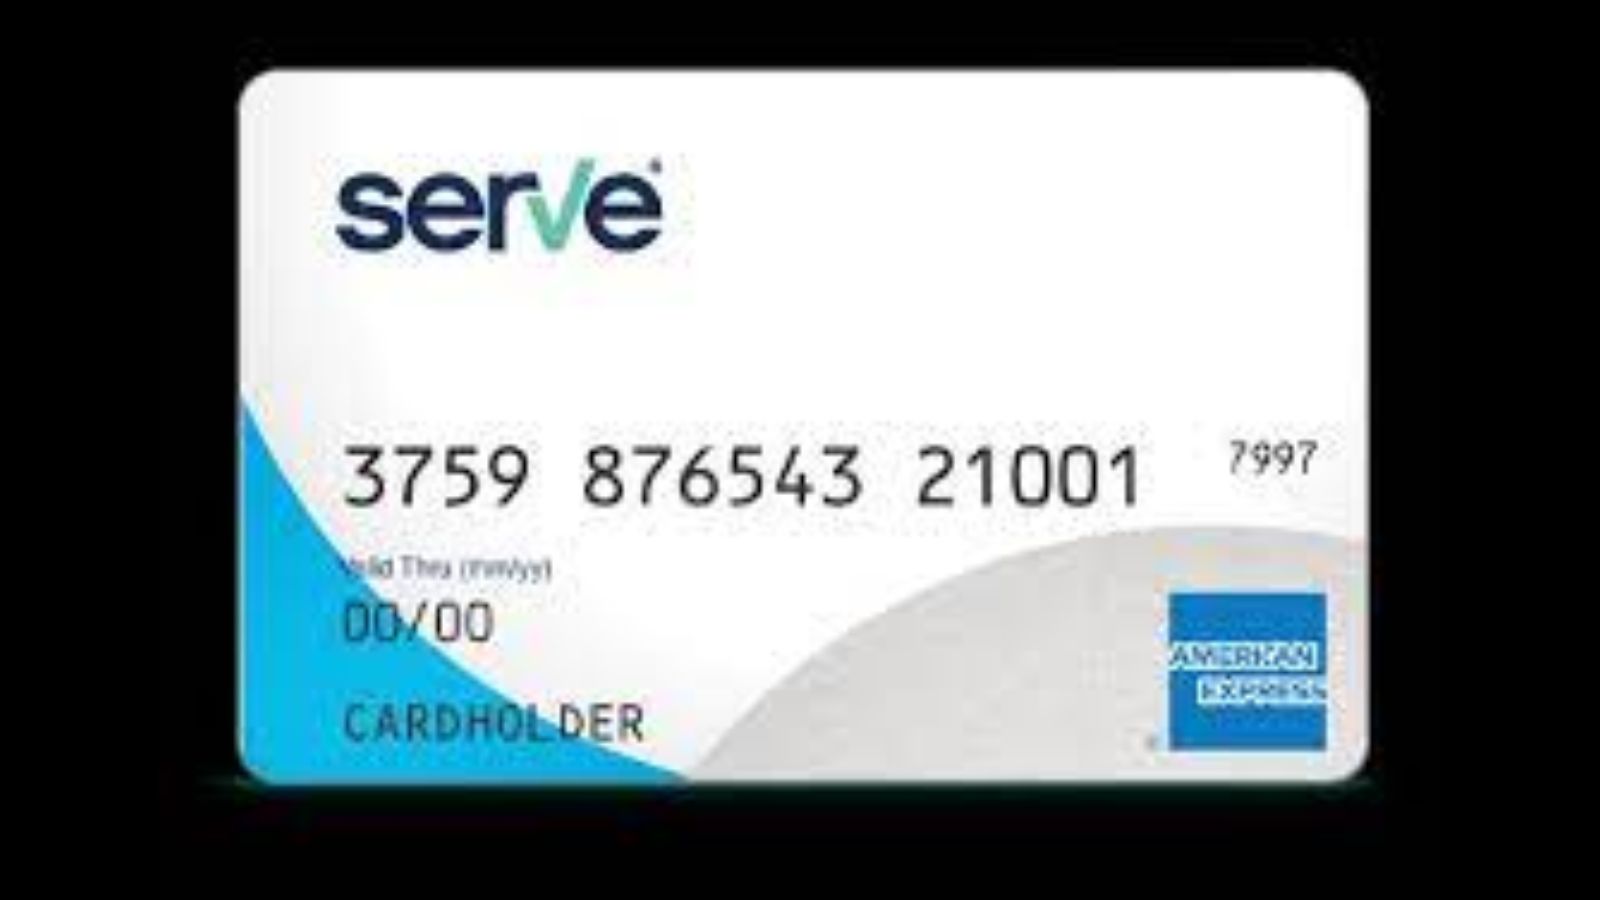 Jackson Hewitt Serve Card Customer Service Number